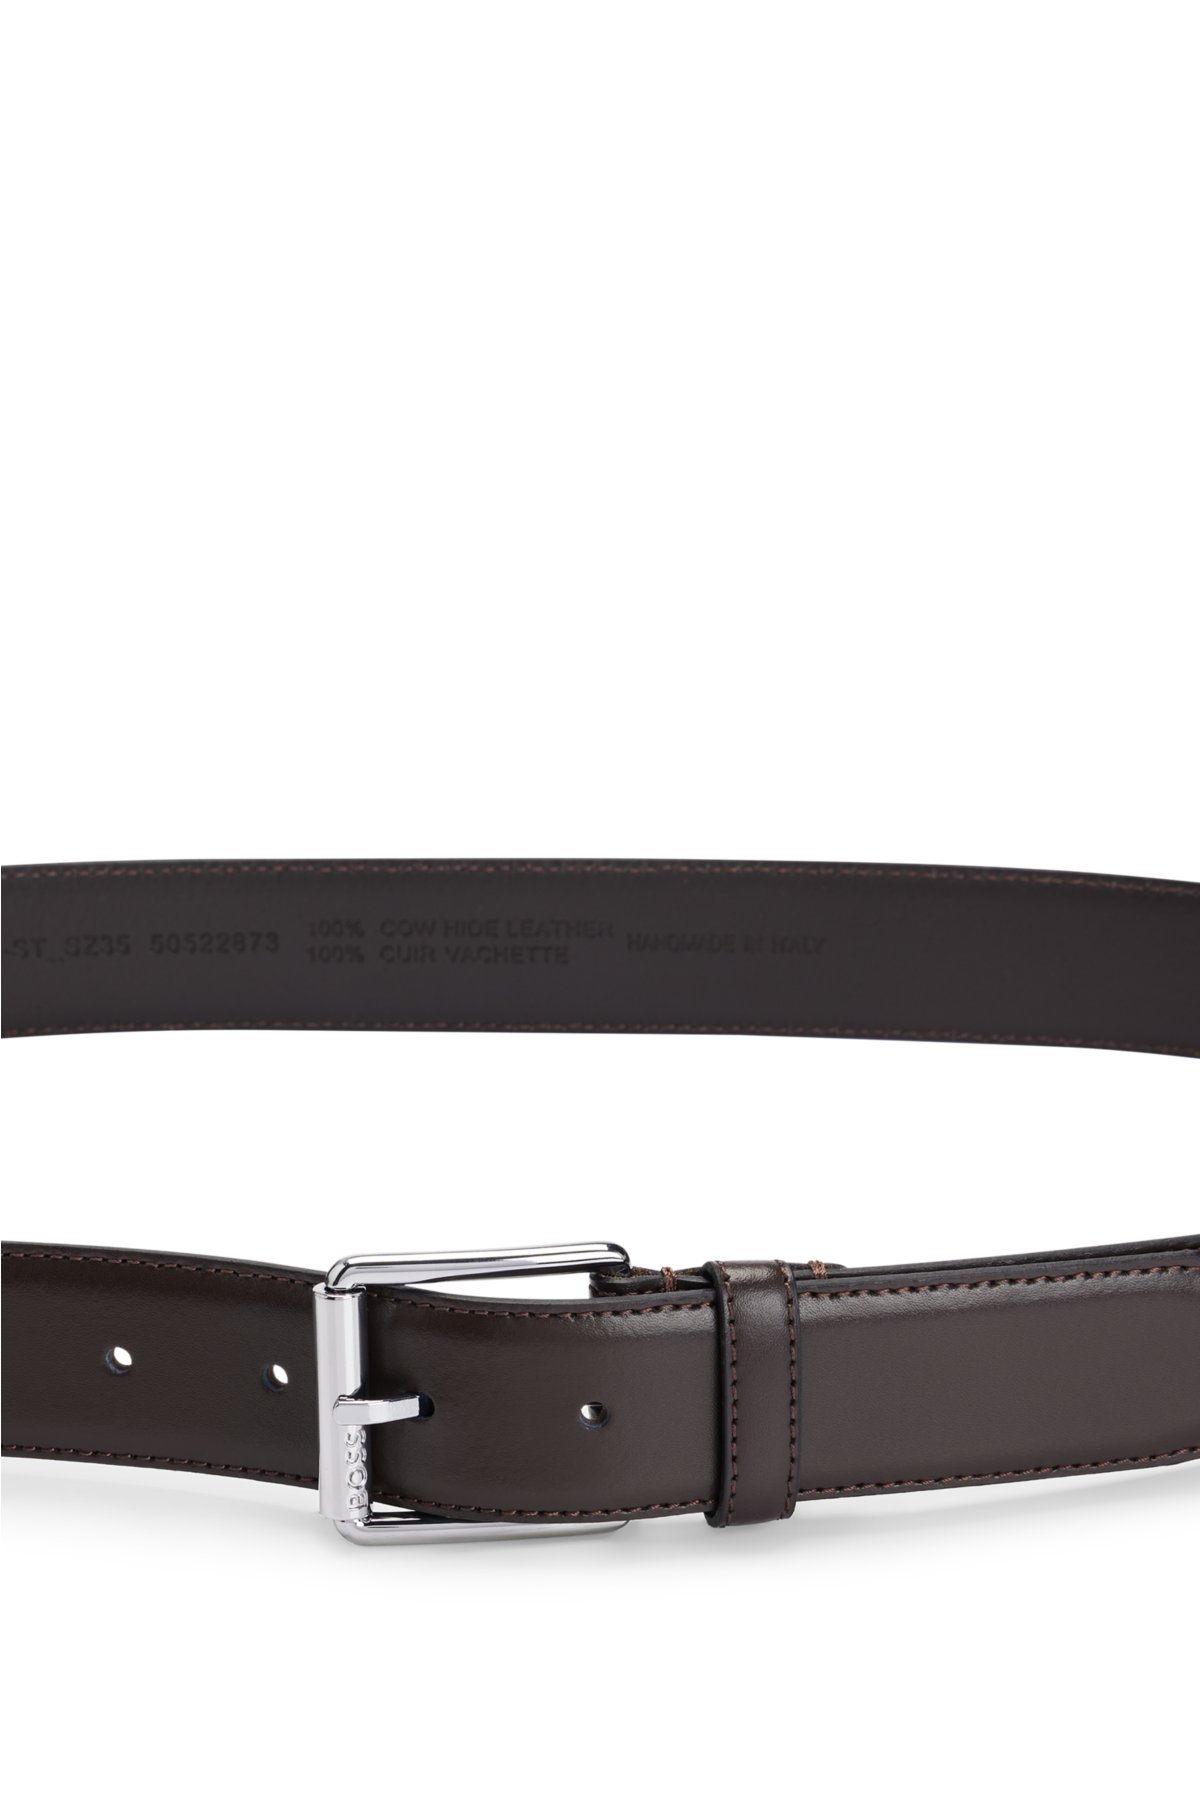 Italian-leather belt with roller buckle, Dark Brown